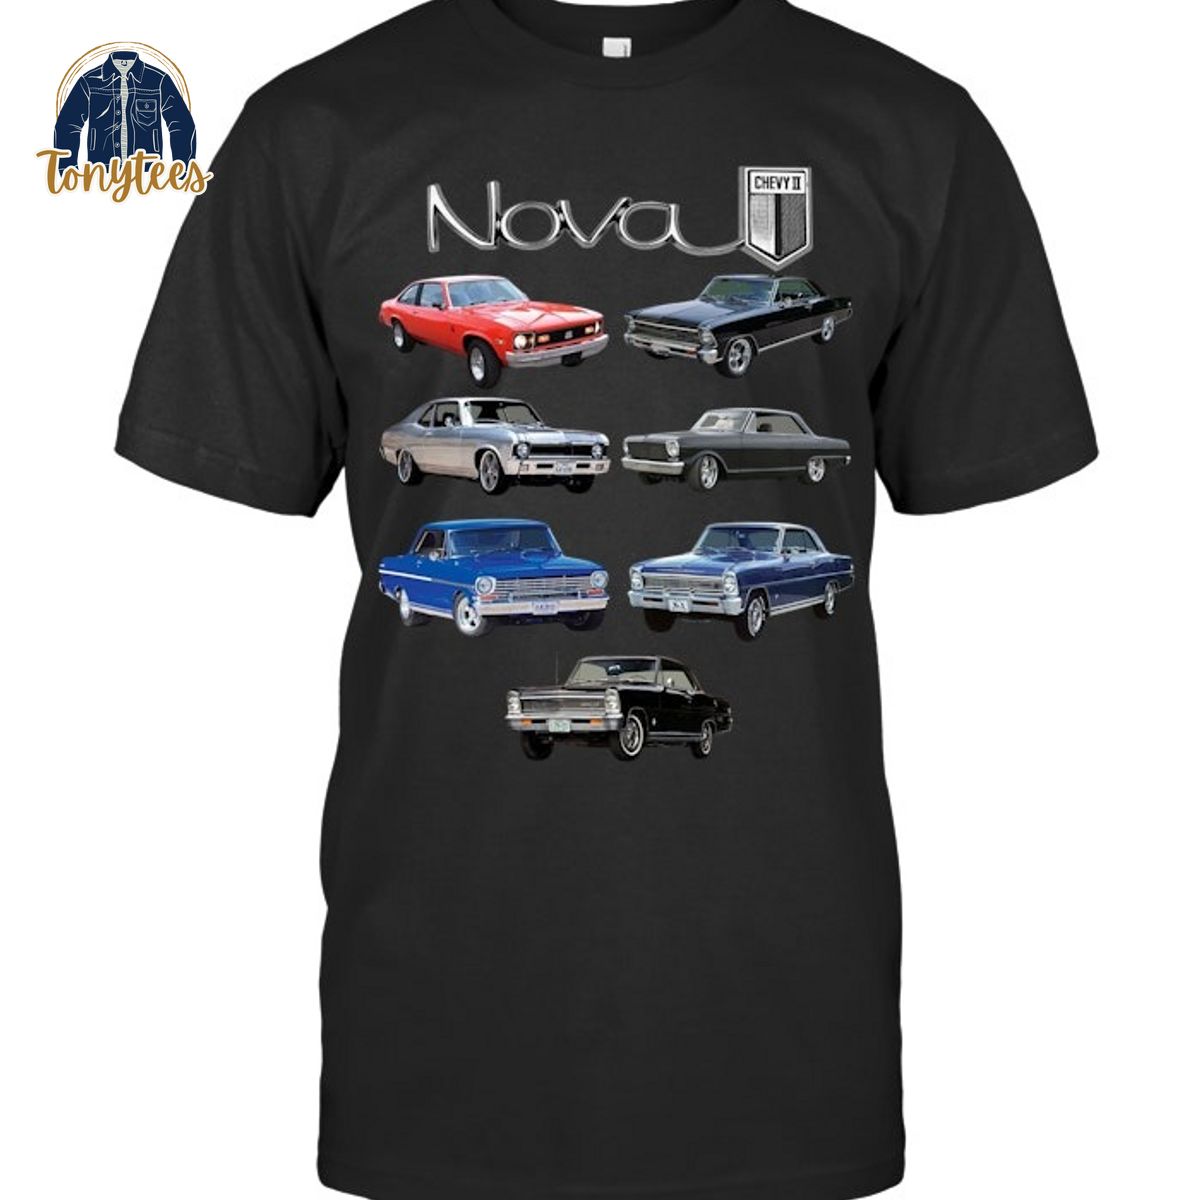 Chevolet Nova Chevy II cars shirt